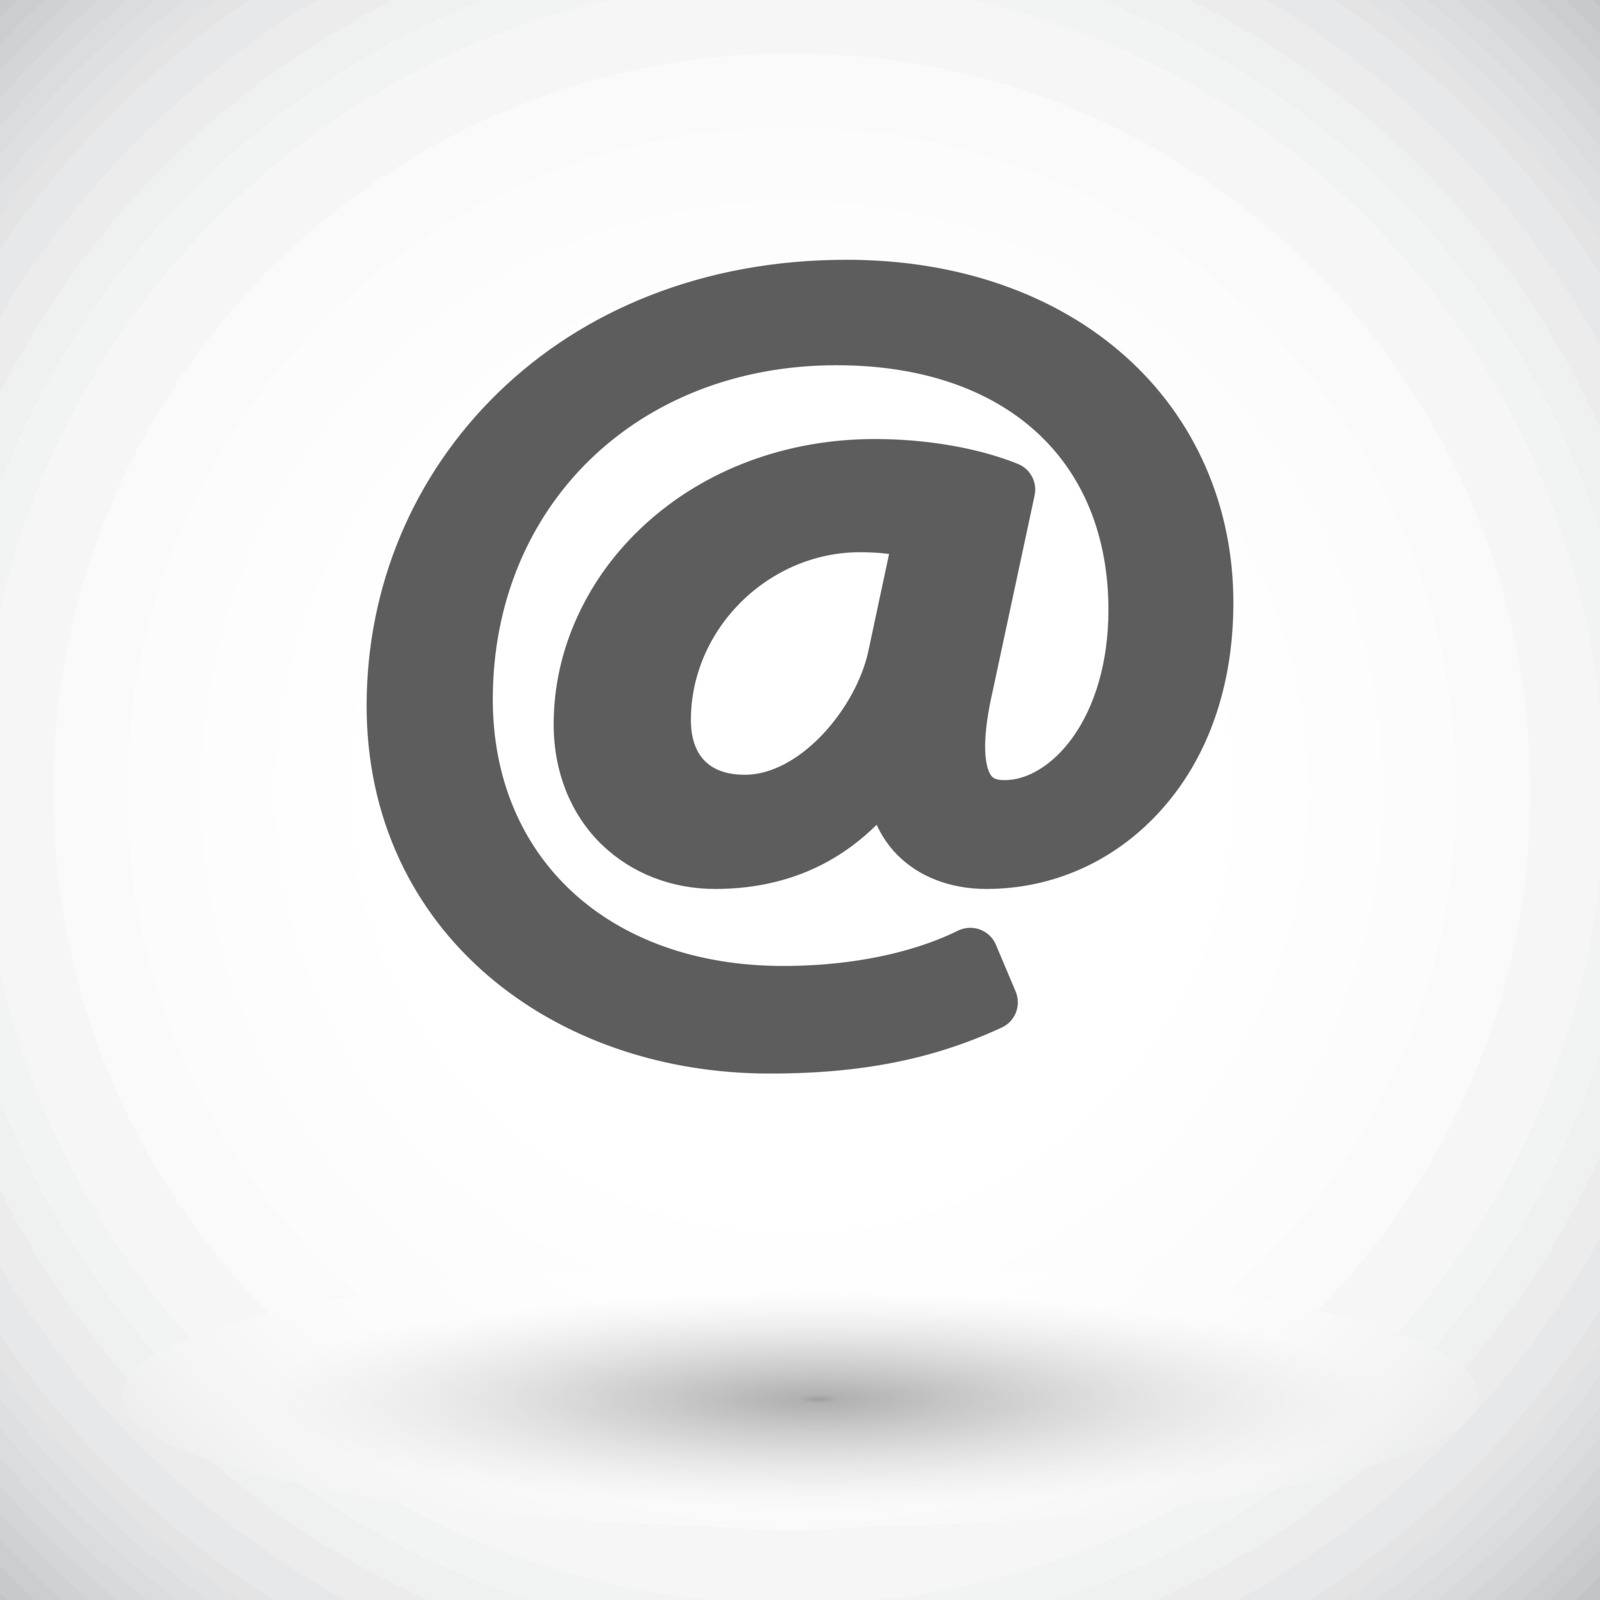 Email single icon. by smoki